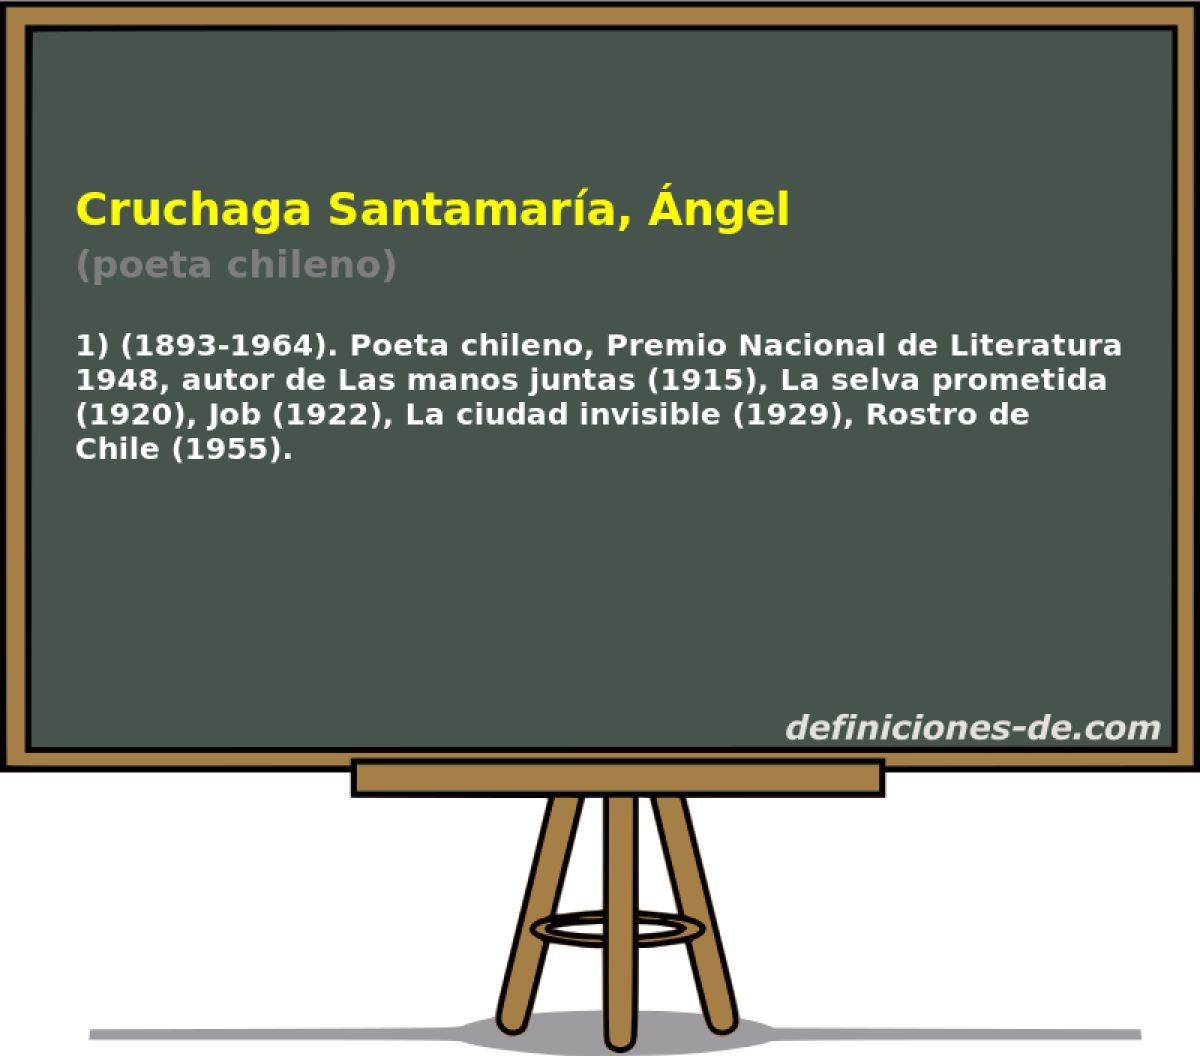 Cruchaga Santamara, ngel (poeta chileno)